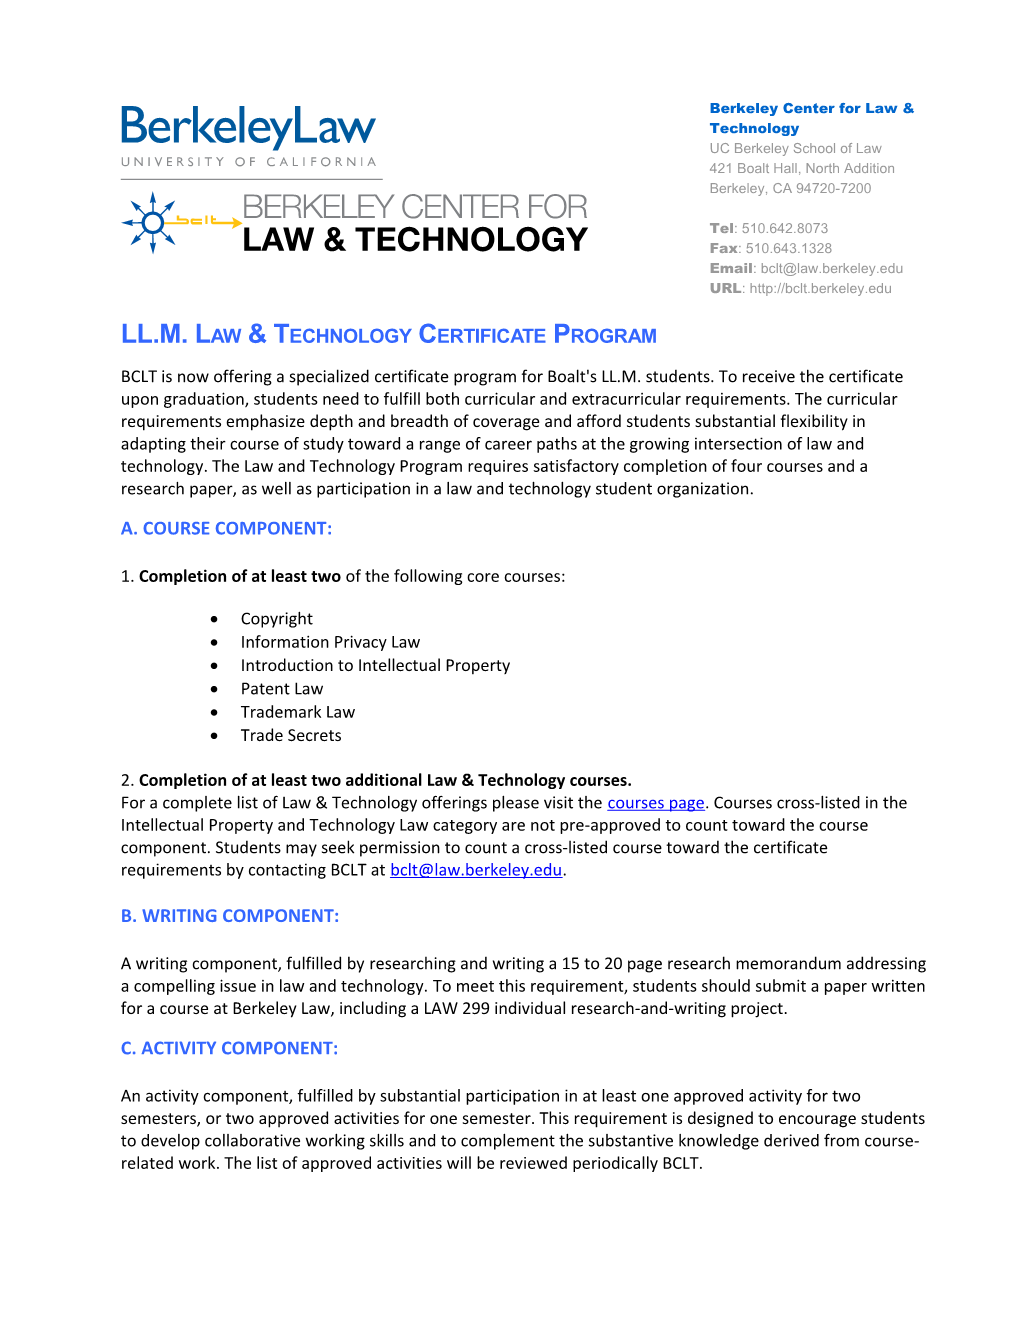 LL.M. Law & Technology Certificate Program